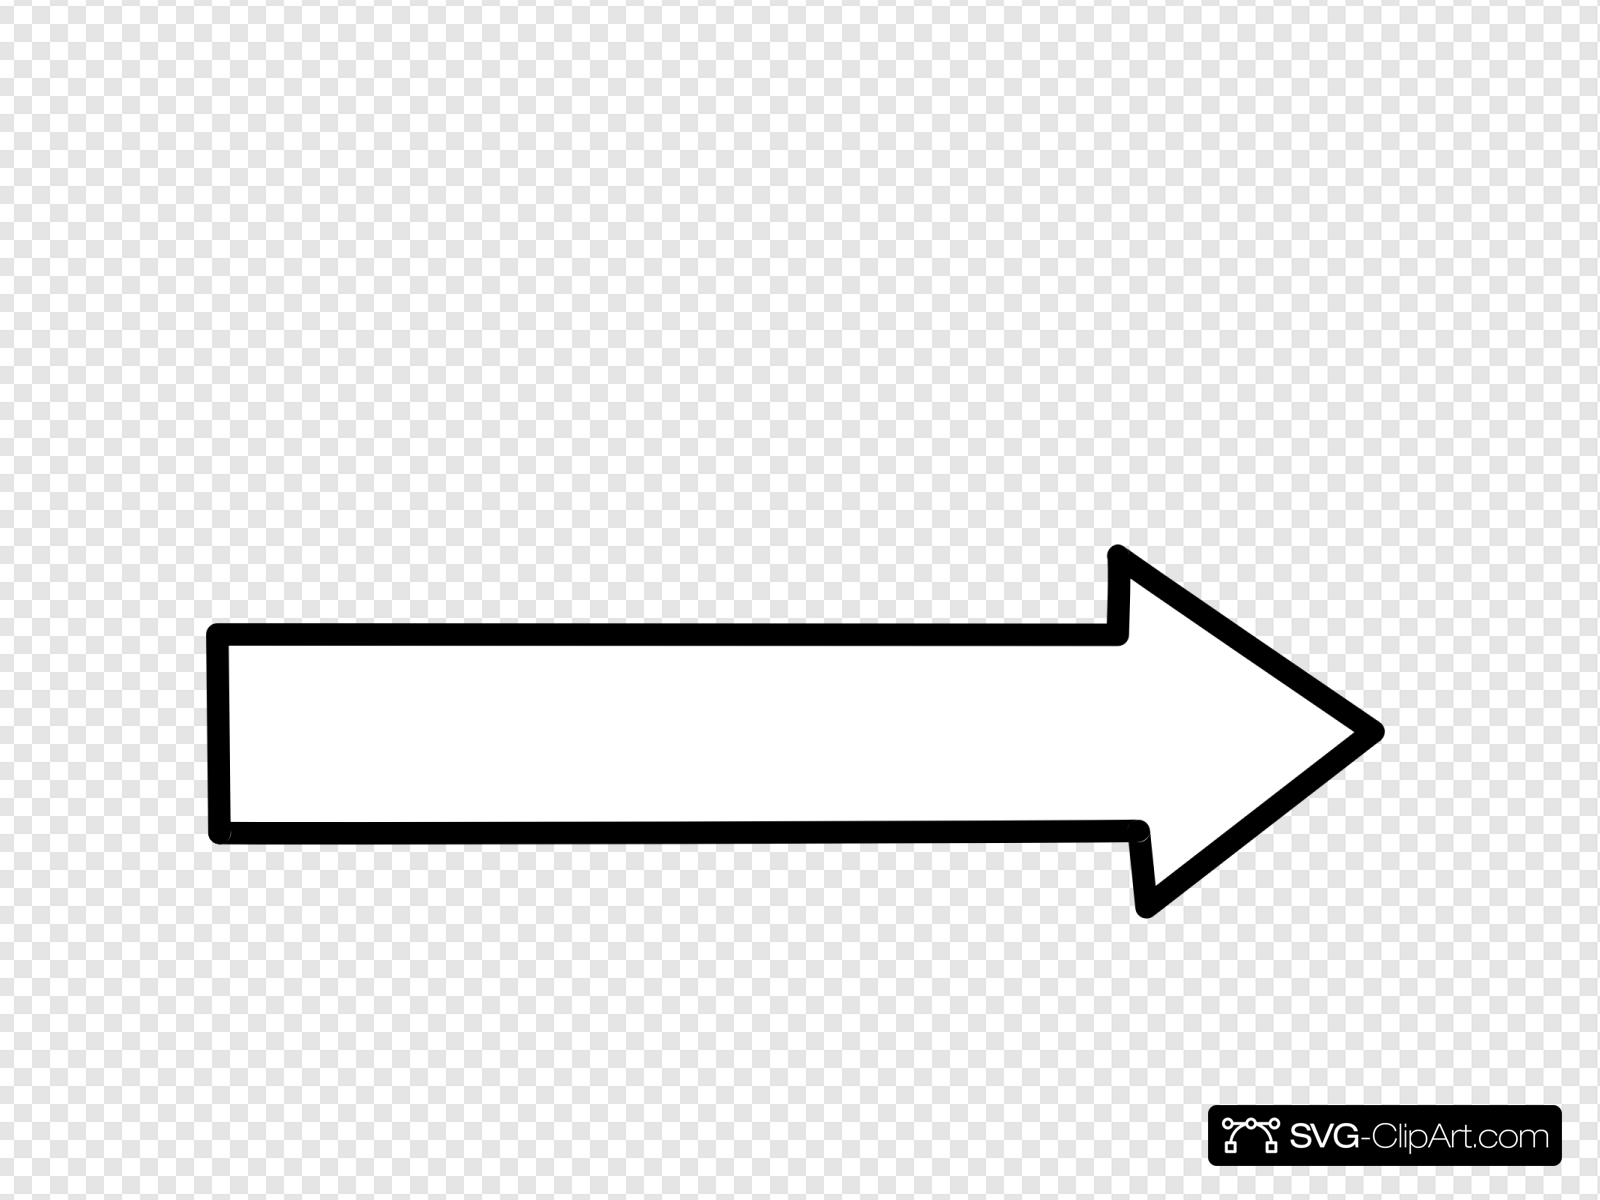 Right Arrow Clip art, Icon and SVG